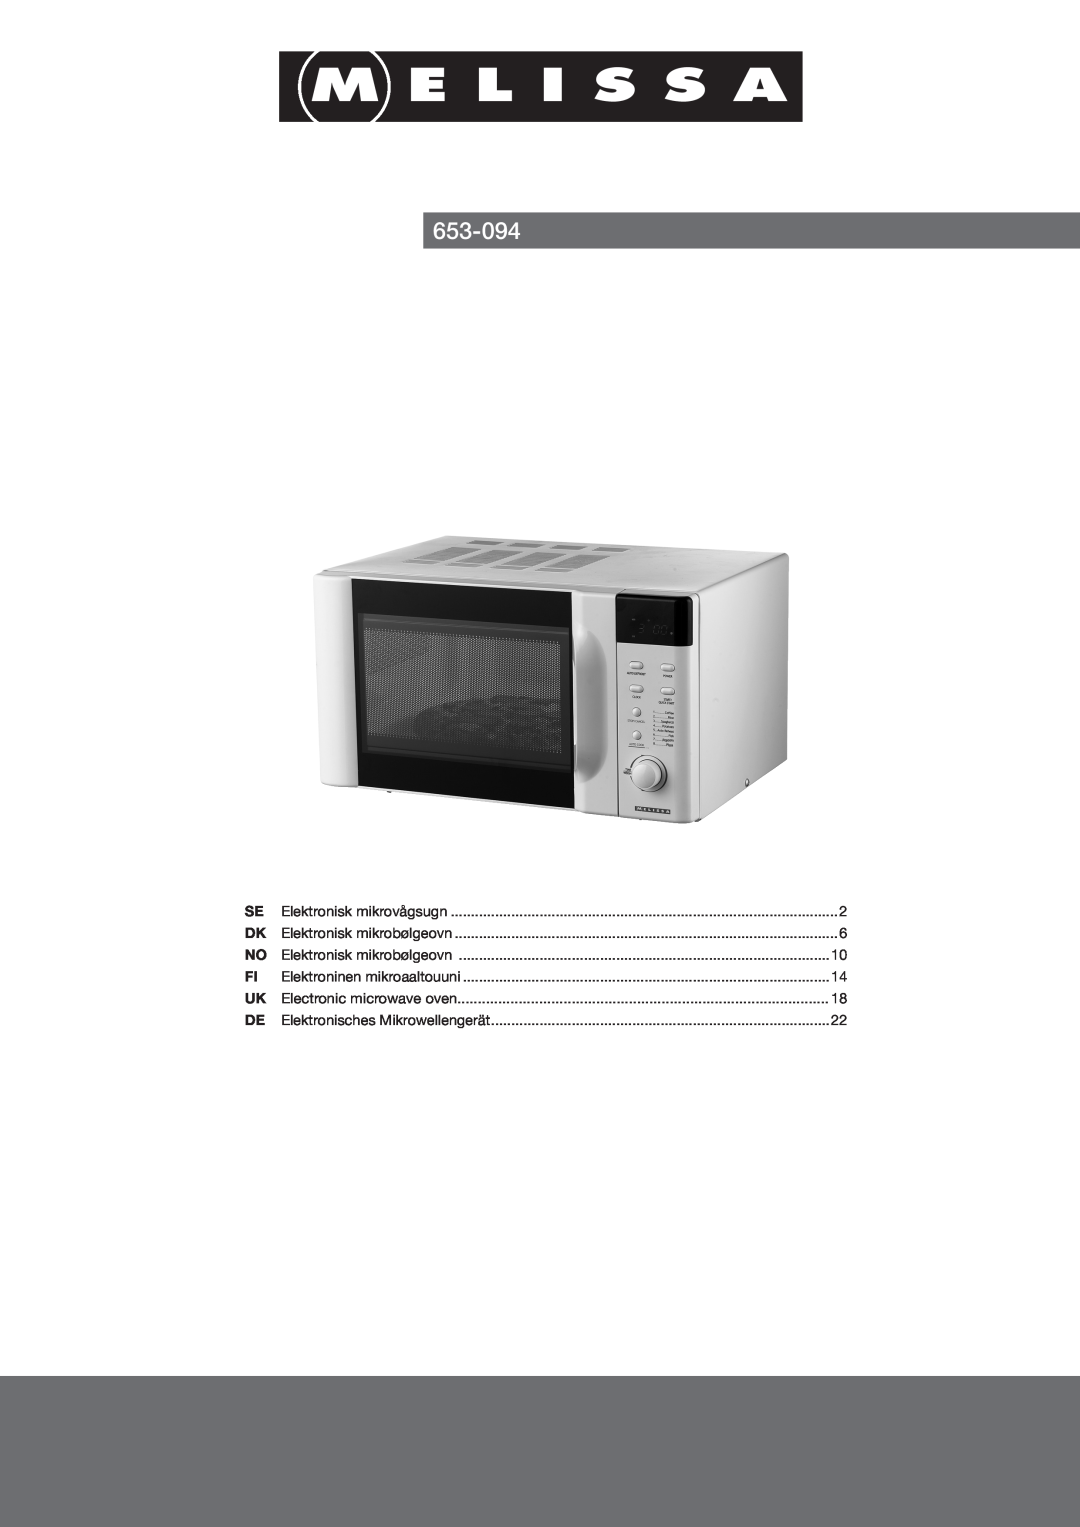 Melissa 653-094 manual Elektronisk mikrobølgeovn, Electronic microwave oven, Elektronisches Mikrowellengerät 